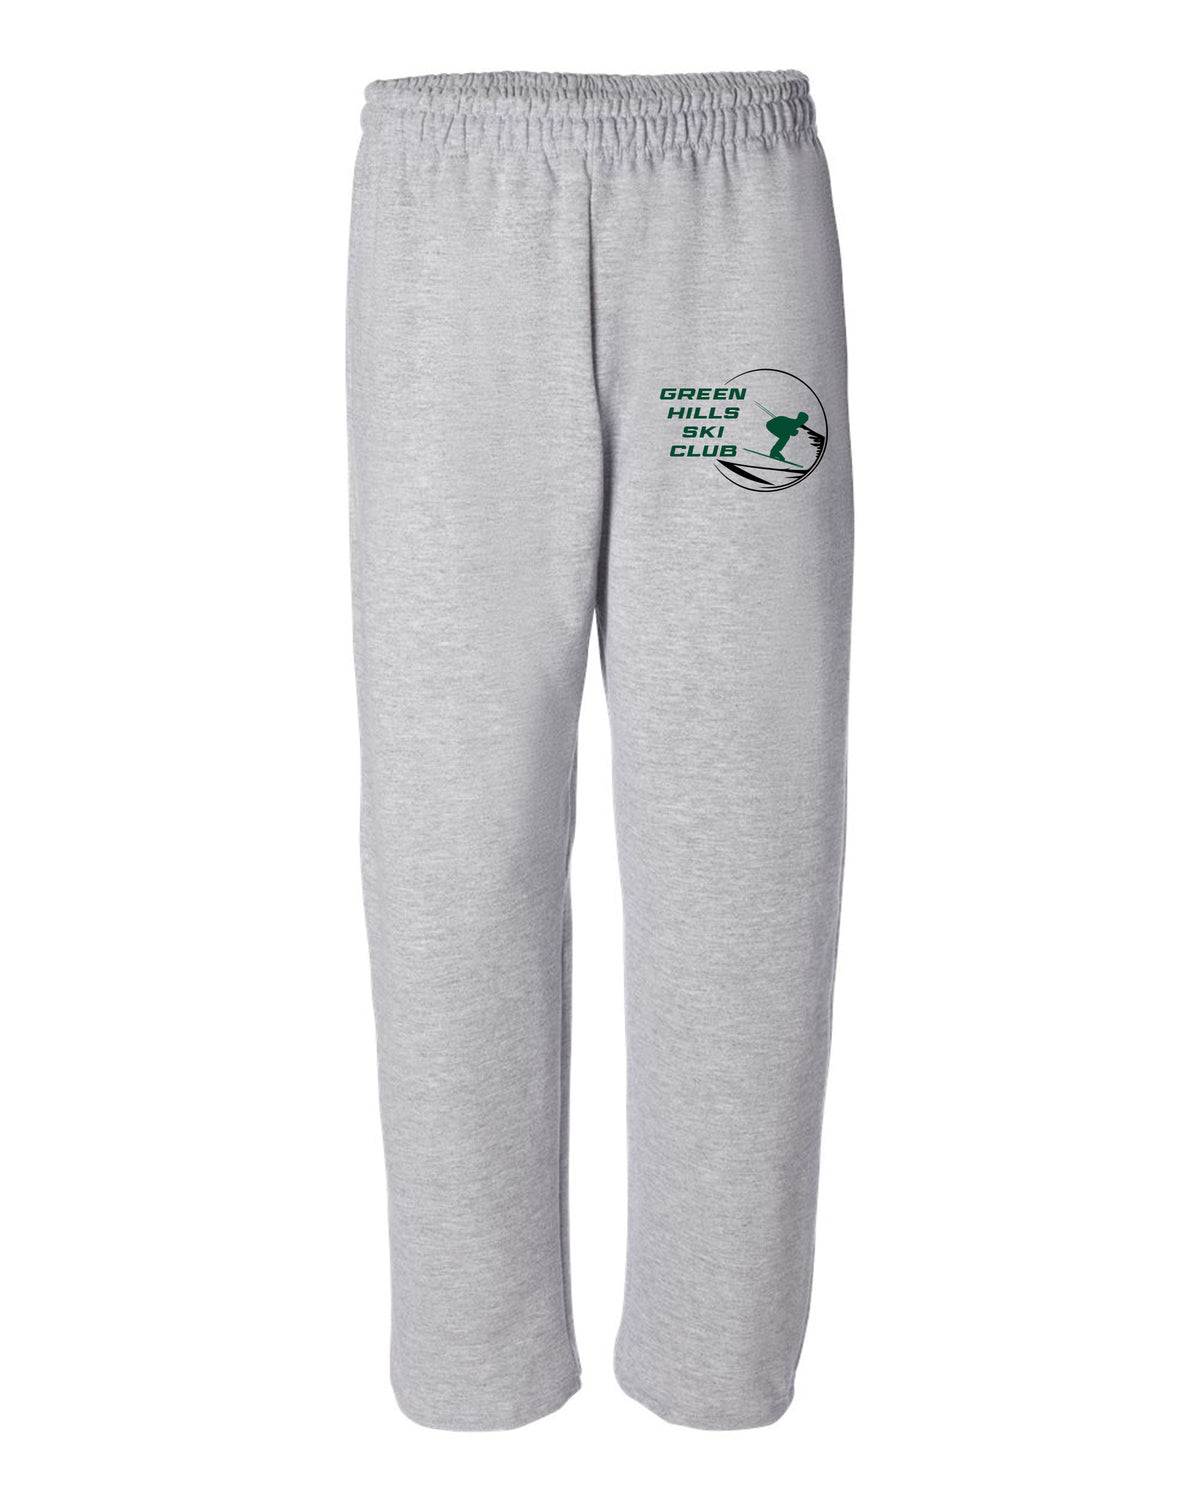 Green Hills Ski Club Design 1 Open Bottom Sweatpants